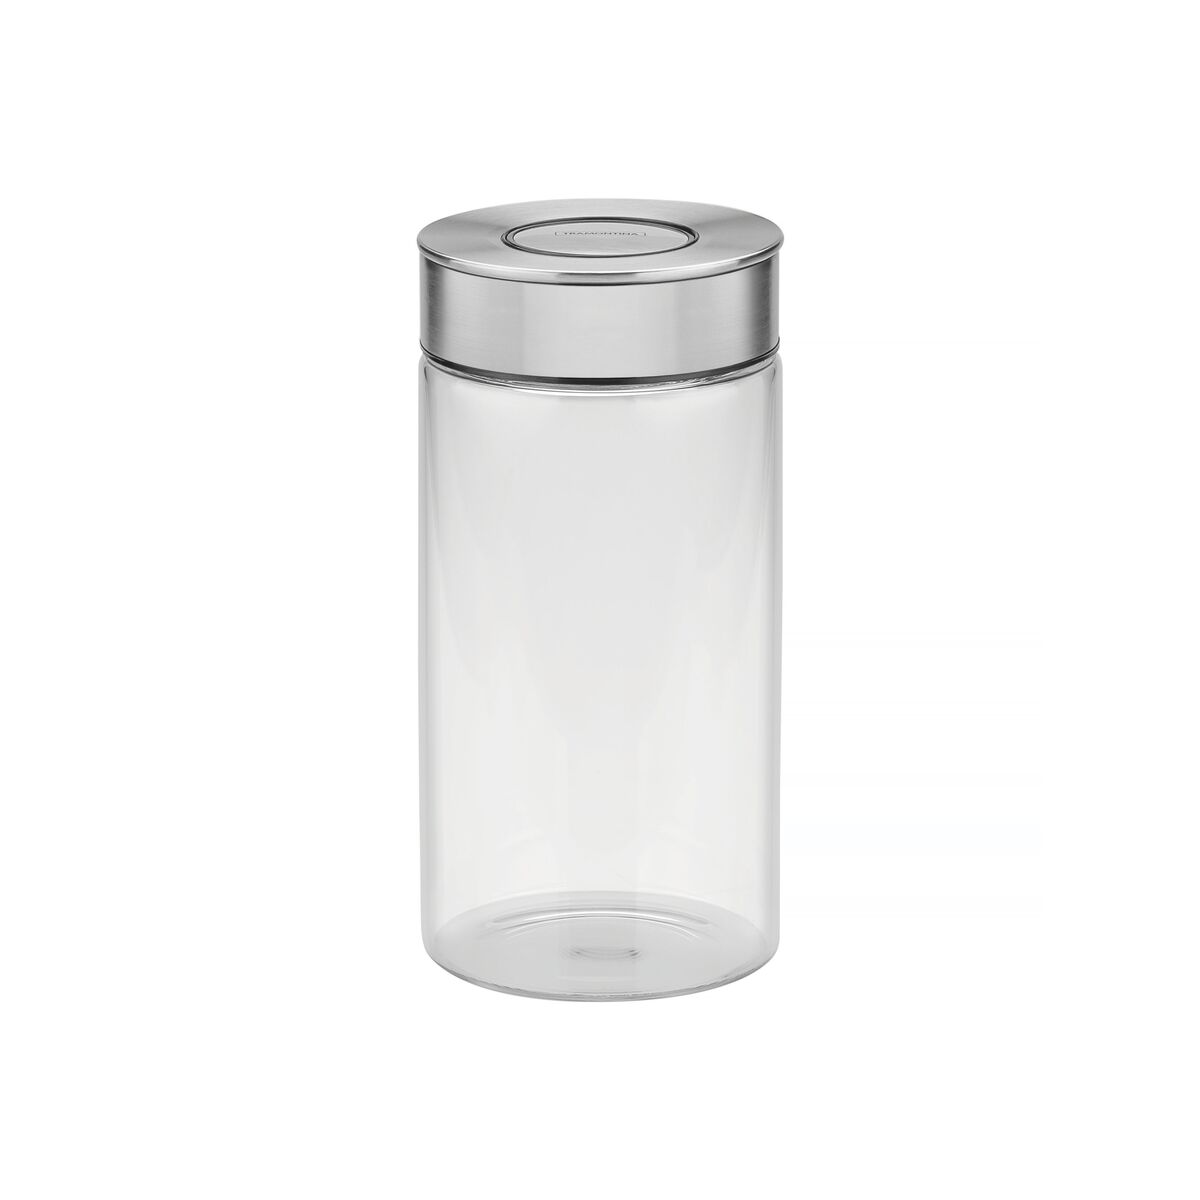 Tramontina Purezza glass jar with stainless steel lid, 1.4 L